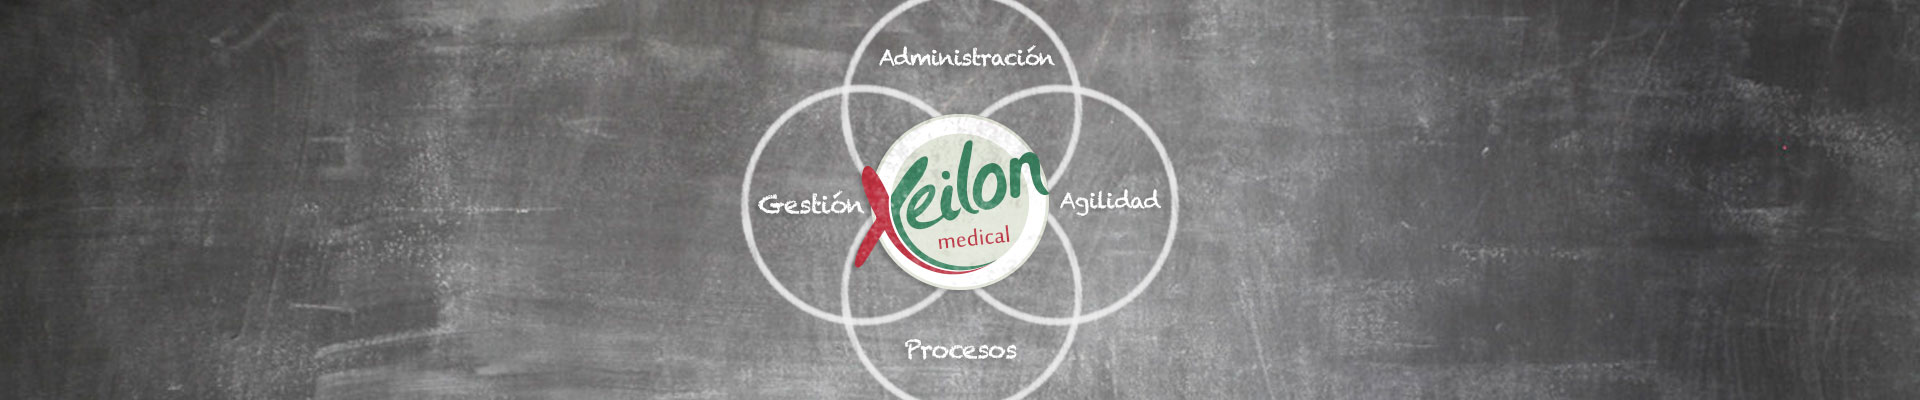 Xeilon  Medical by Galbop